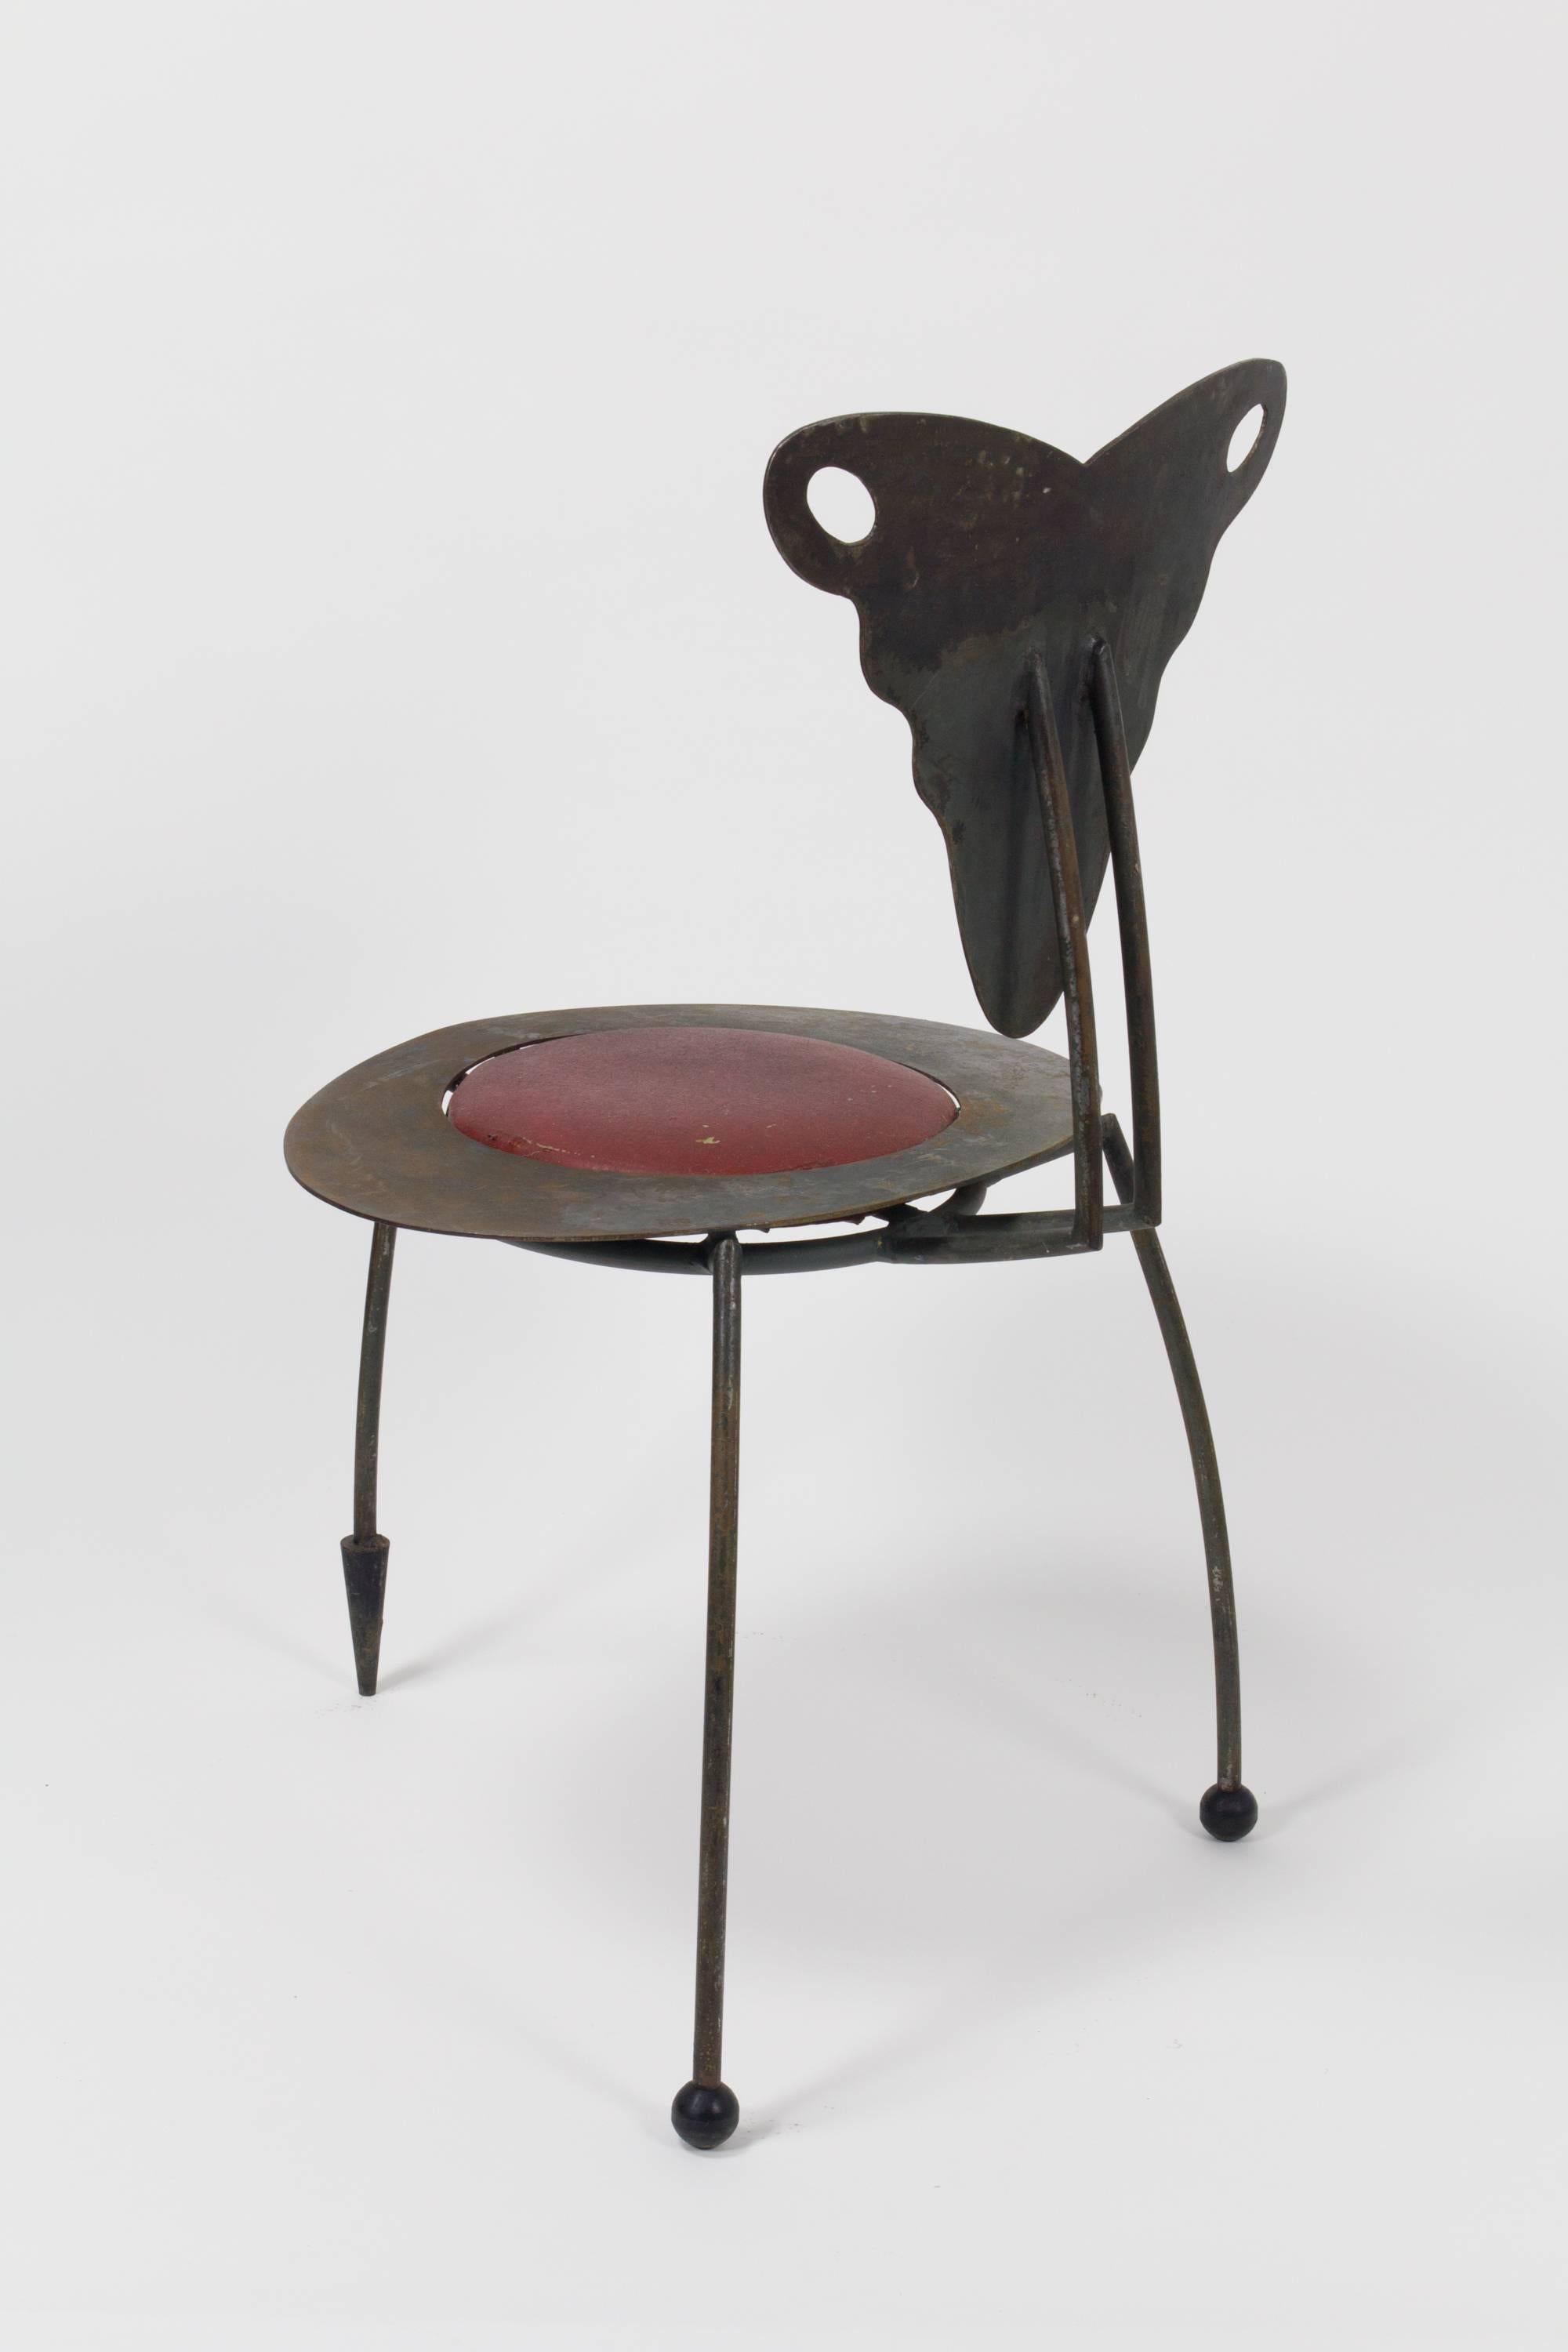 Art Nouveau French Sculptural Praying Mantis Chair